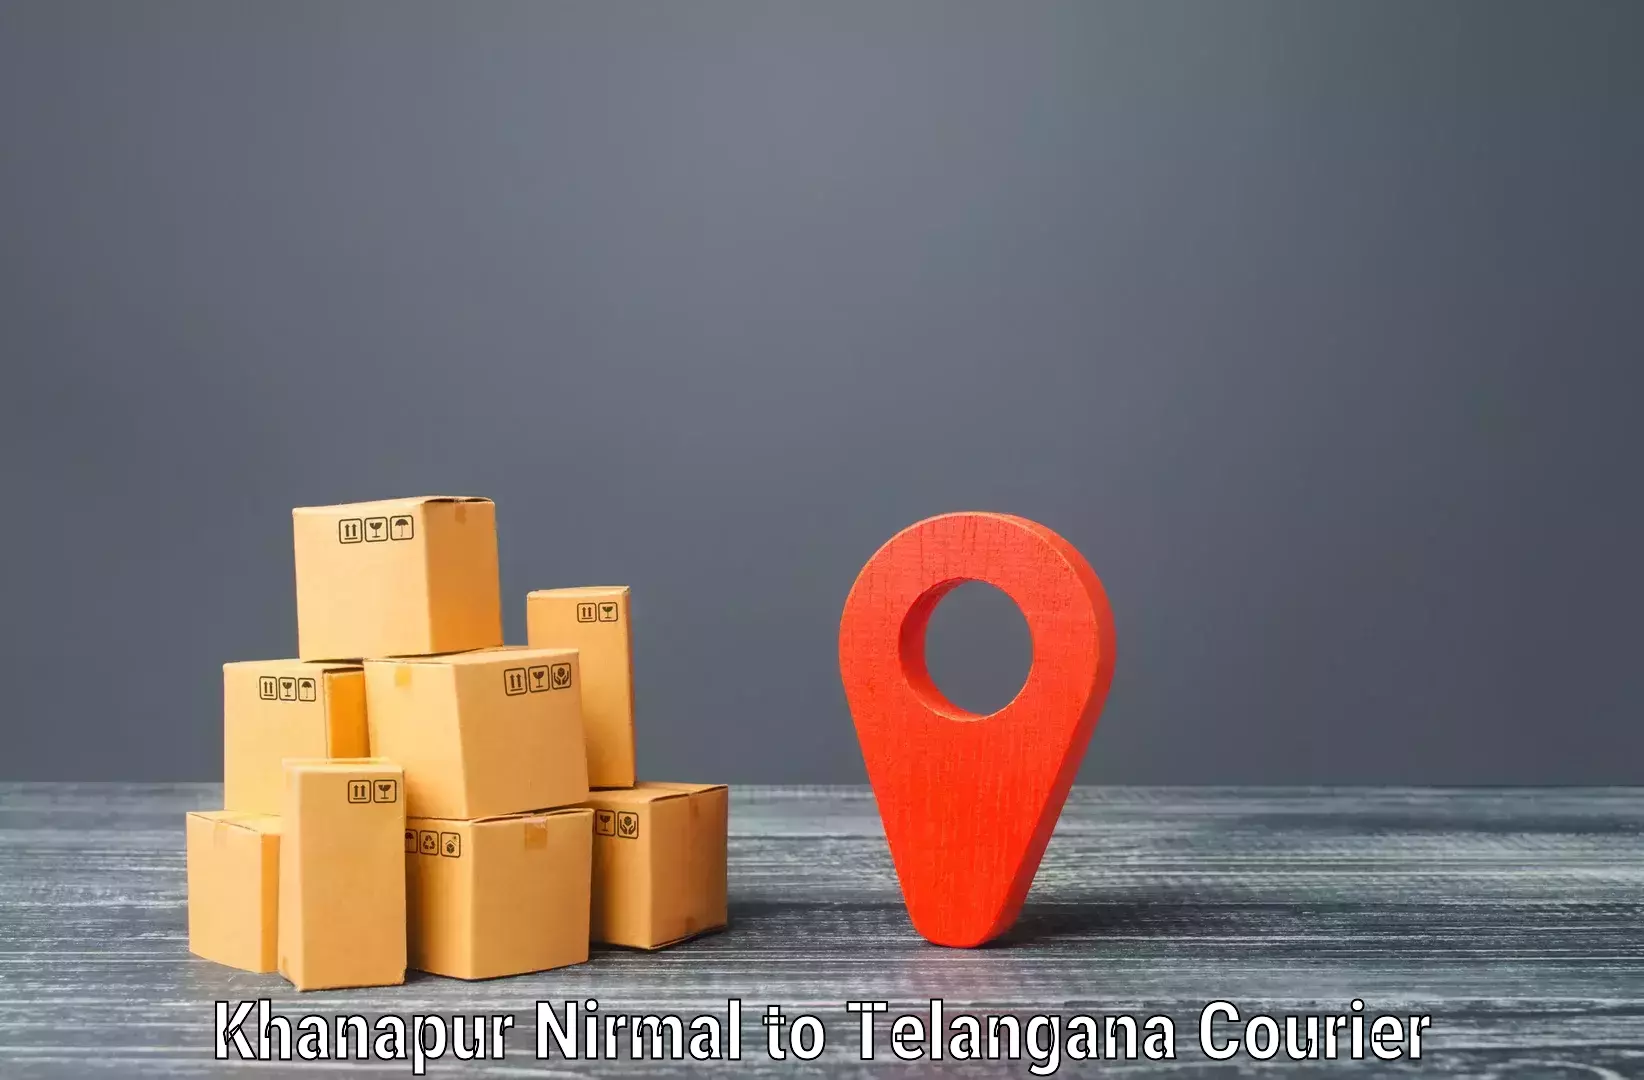 Flexible delivery schedules in Khanapur Nirmal to Ibrahimpatnam